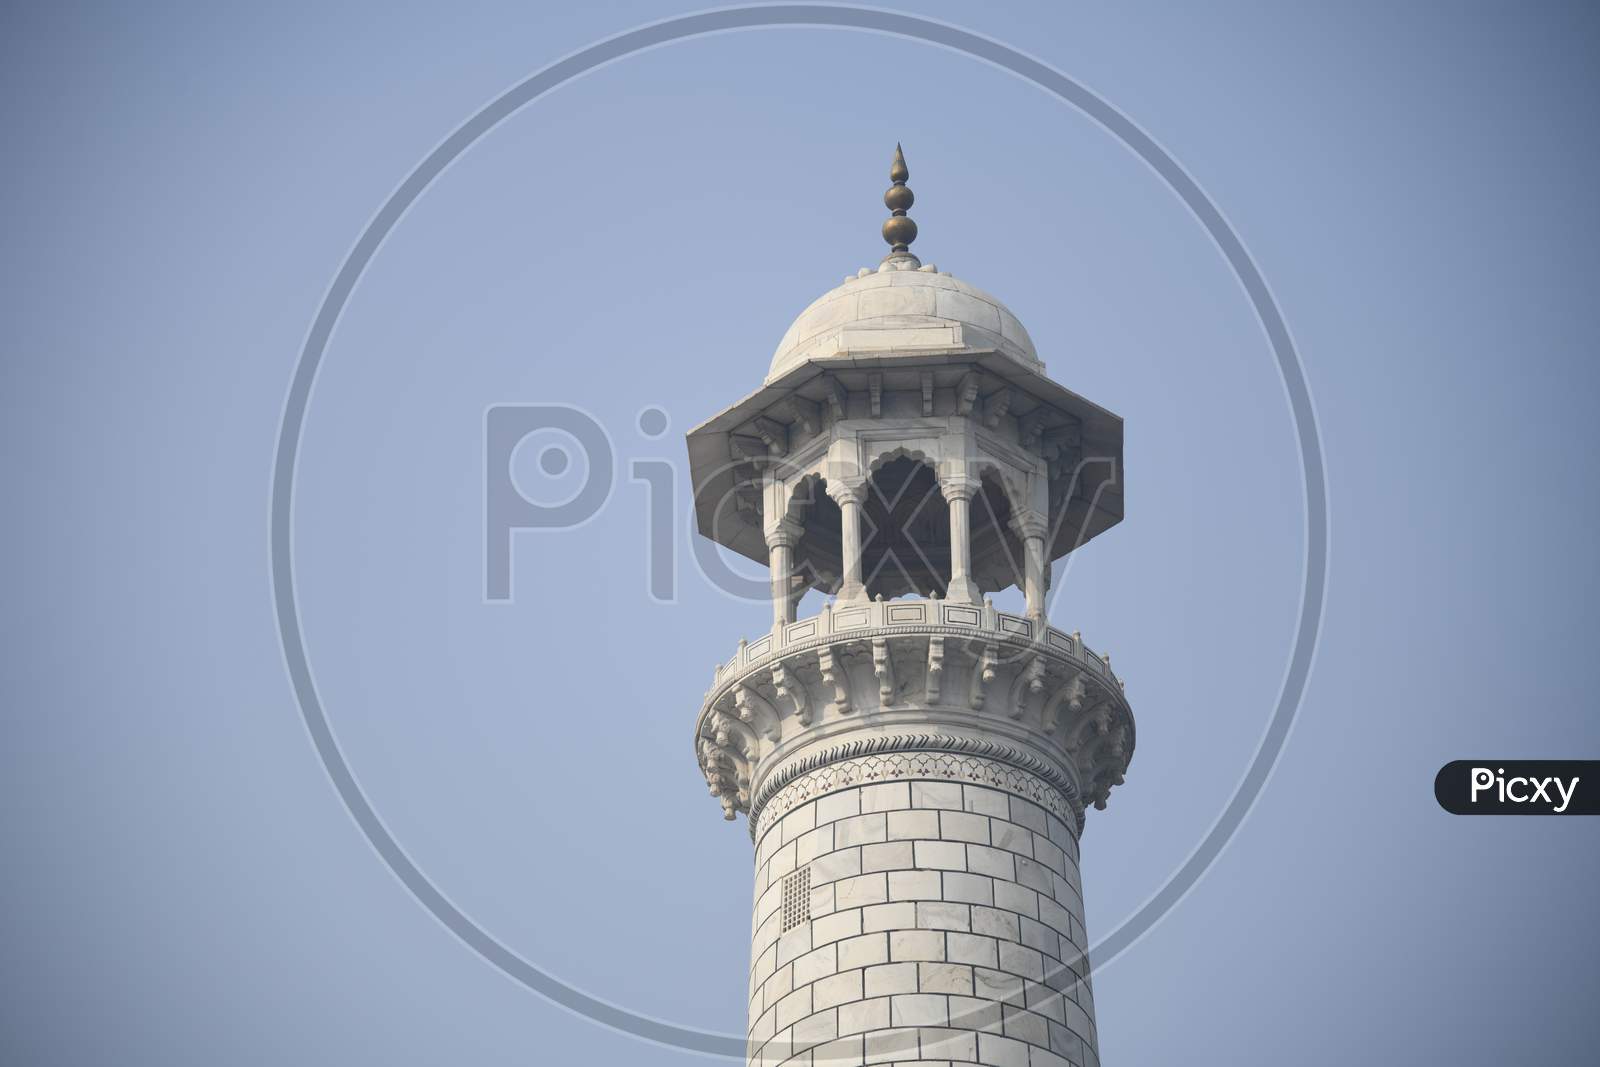 Dome of Marble Minaret of Taj Mahal